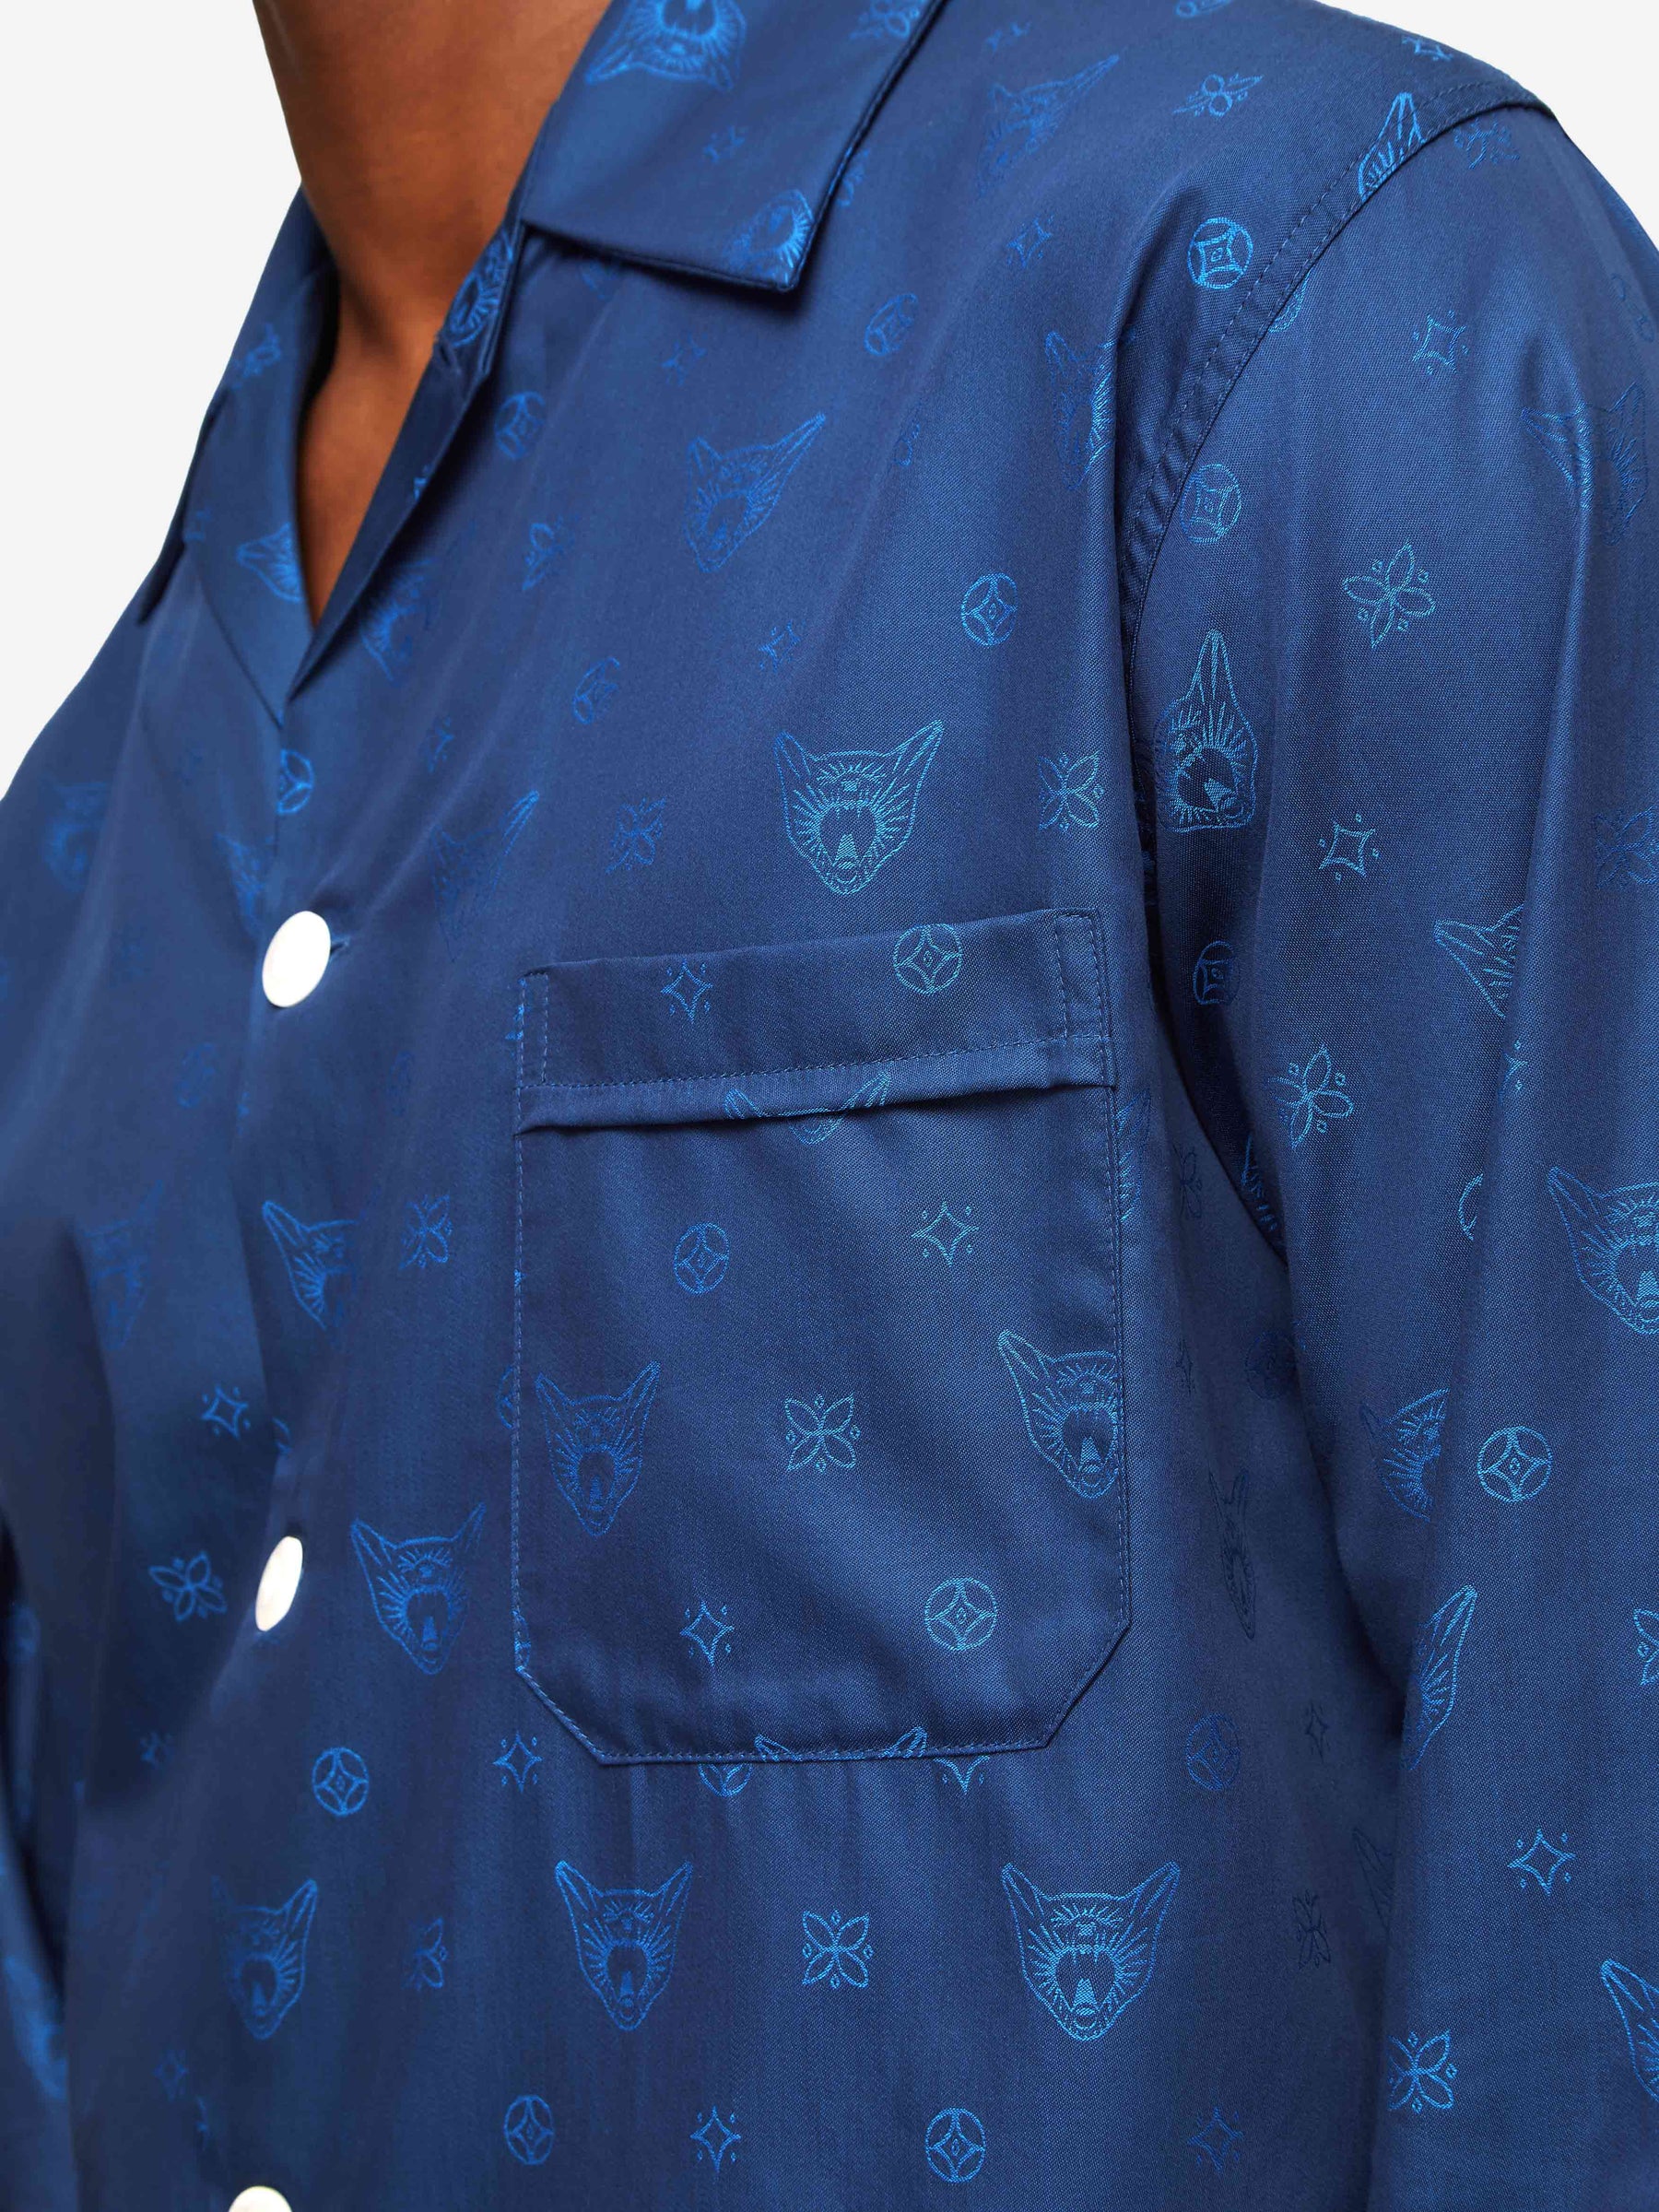 Supreme x Louis Vuitton Jacquard Silk Pajama Pant Blue Men's - SS17 - US